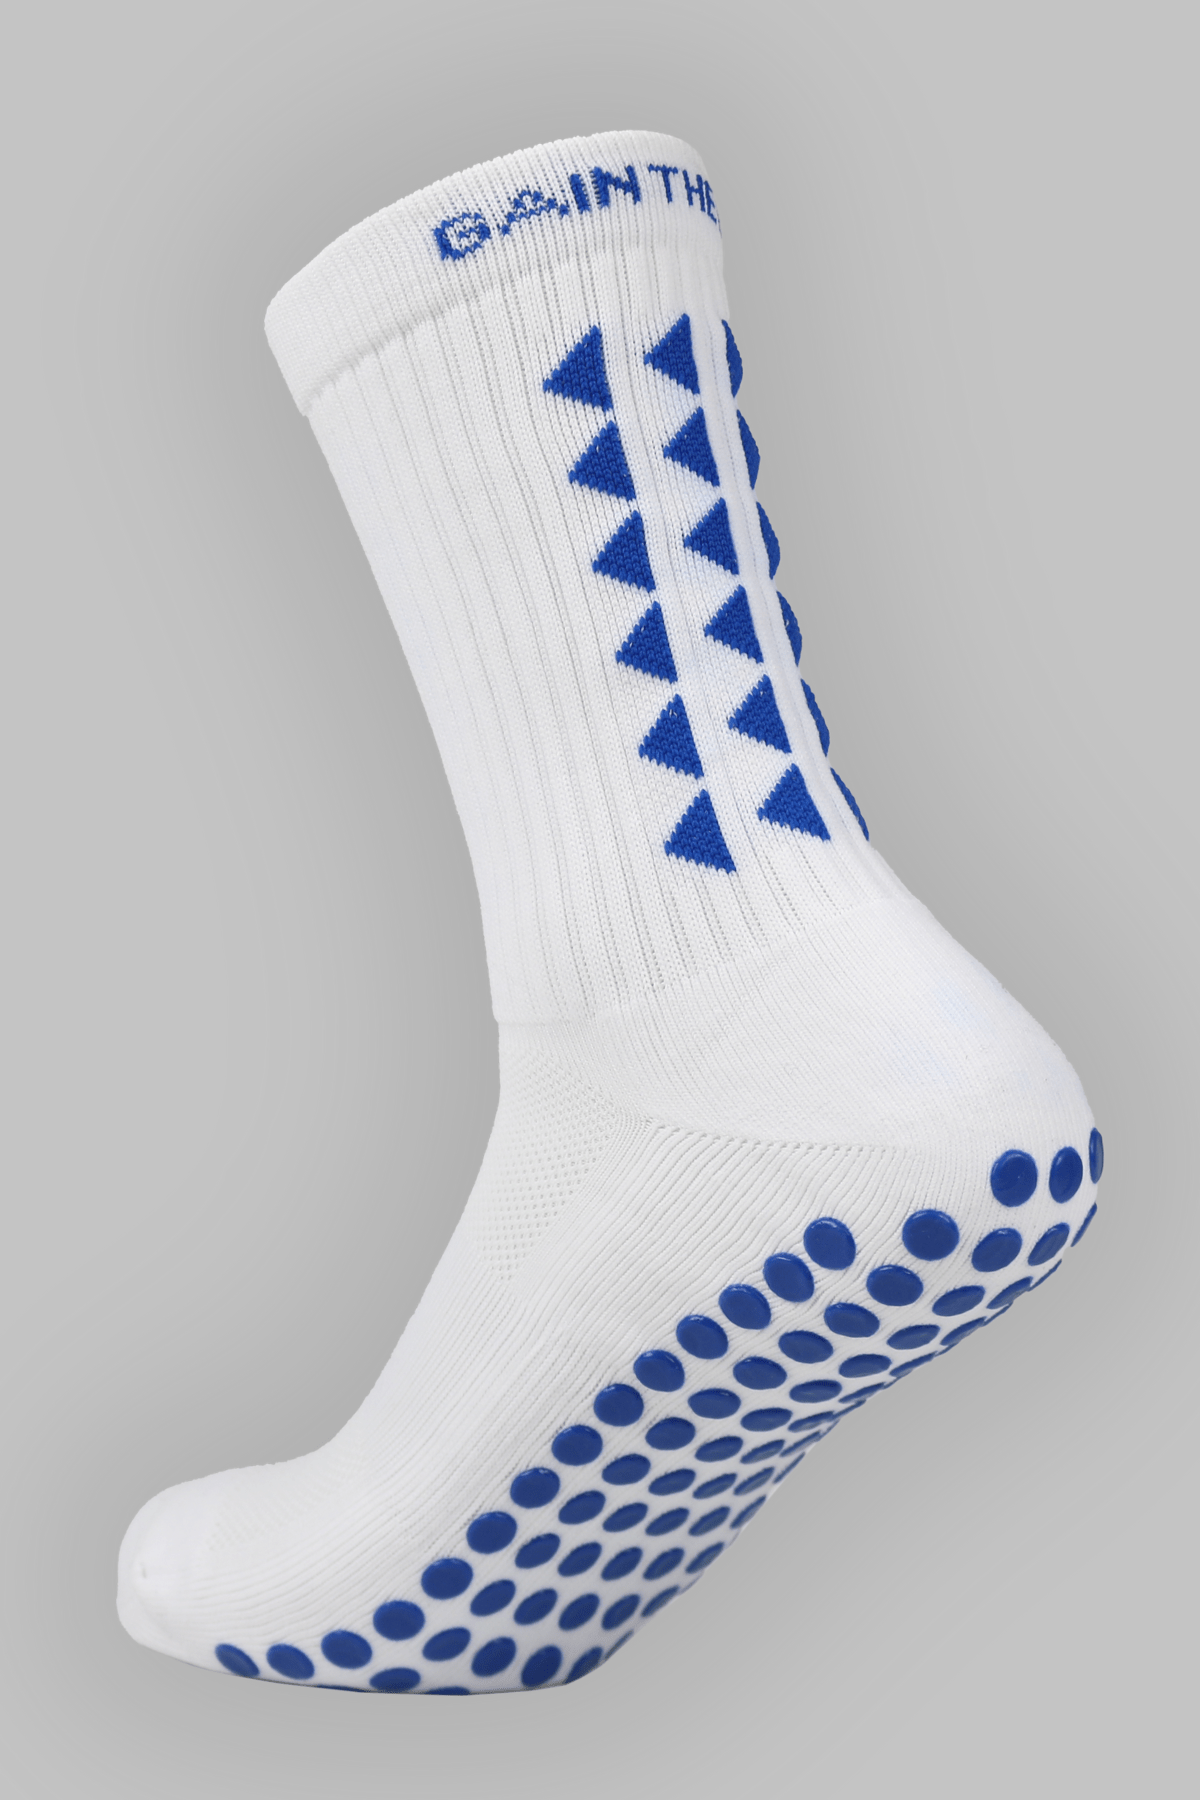 Grip Socks 2.0 - Midcalf Length - Gain The Edge US